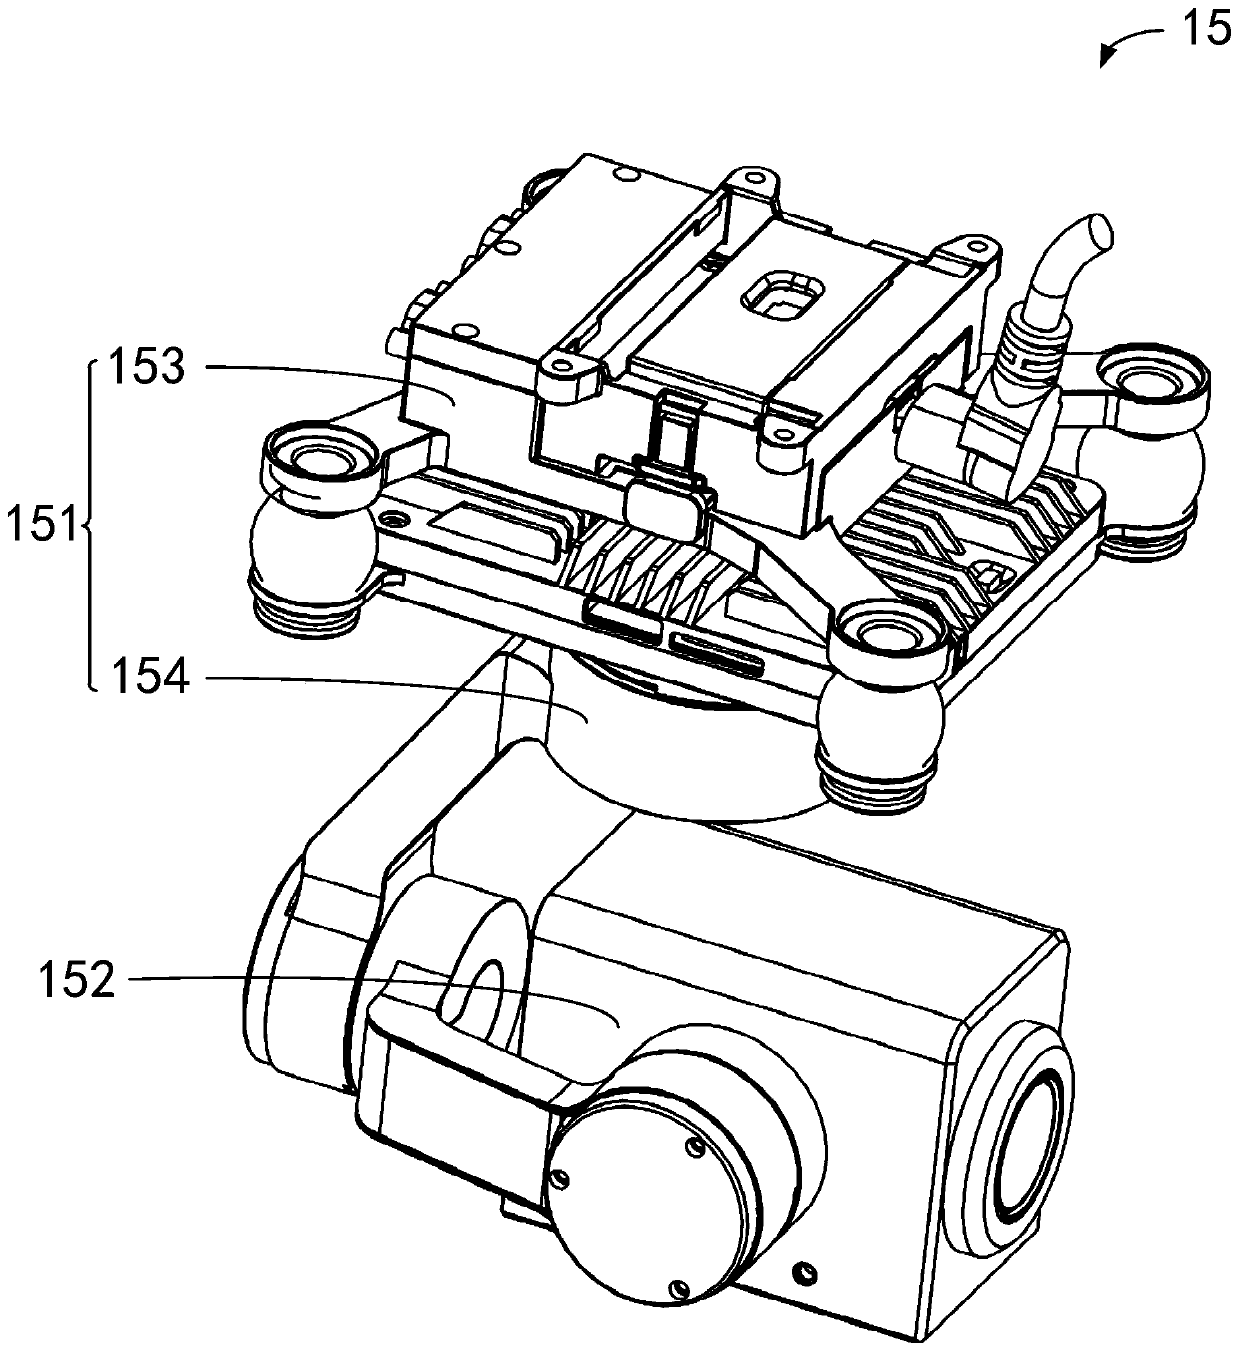 Replaceable pan-tilt camera, aircraft, system and pan-tilt replacement method thereof